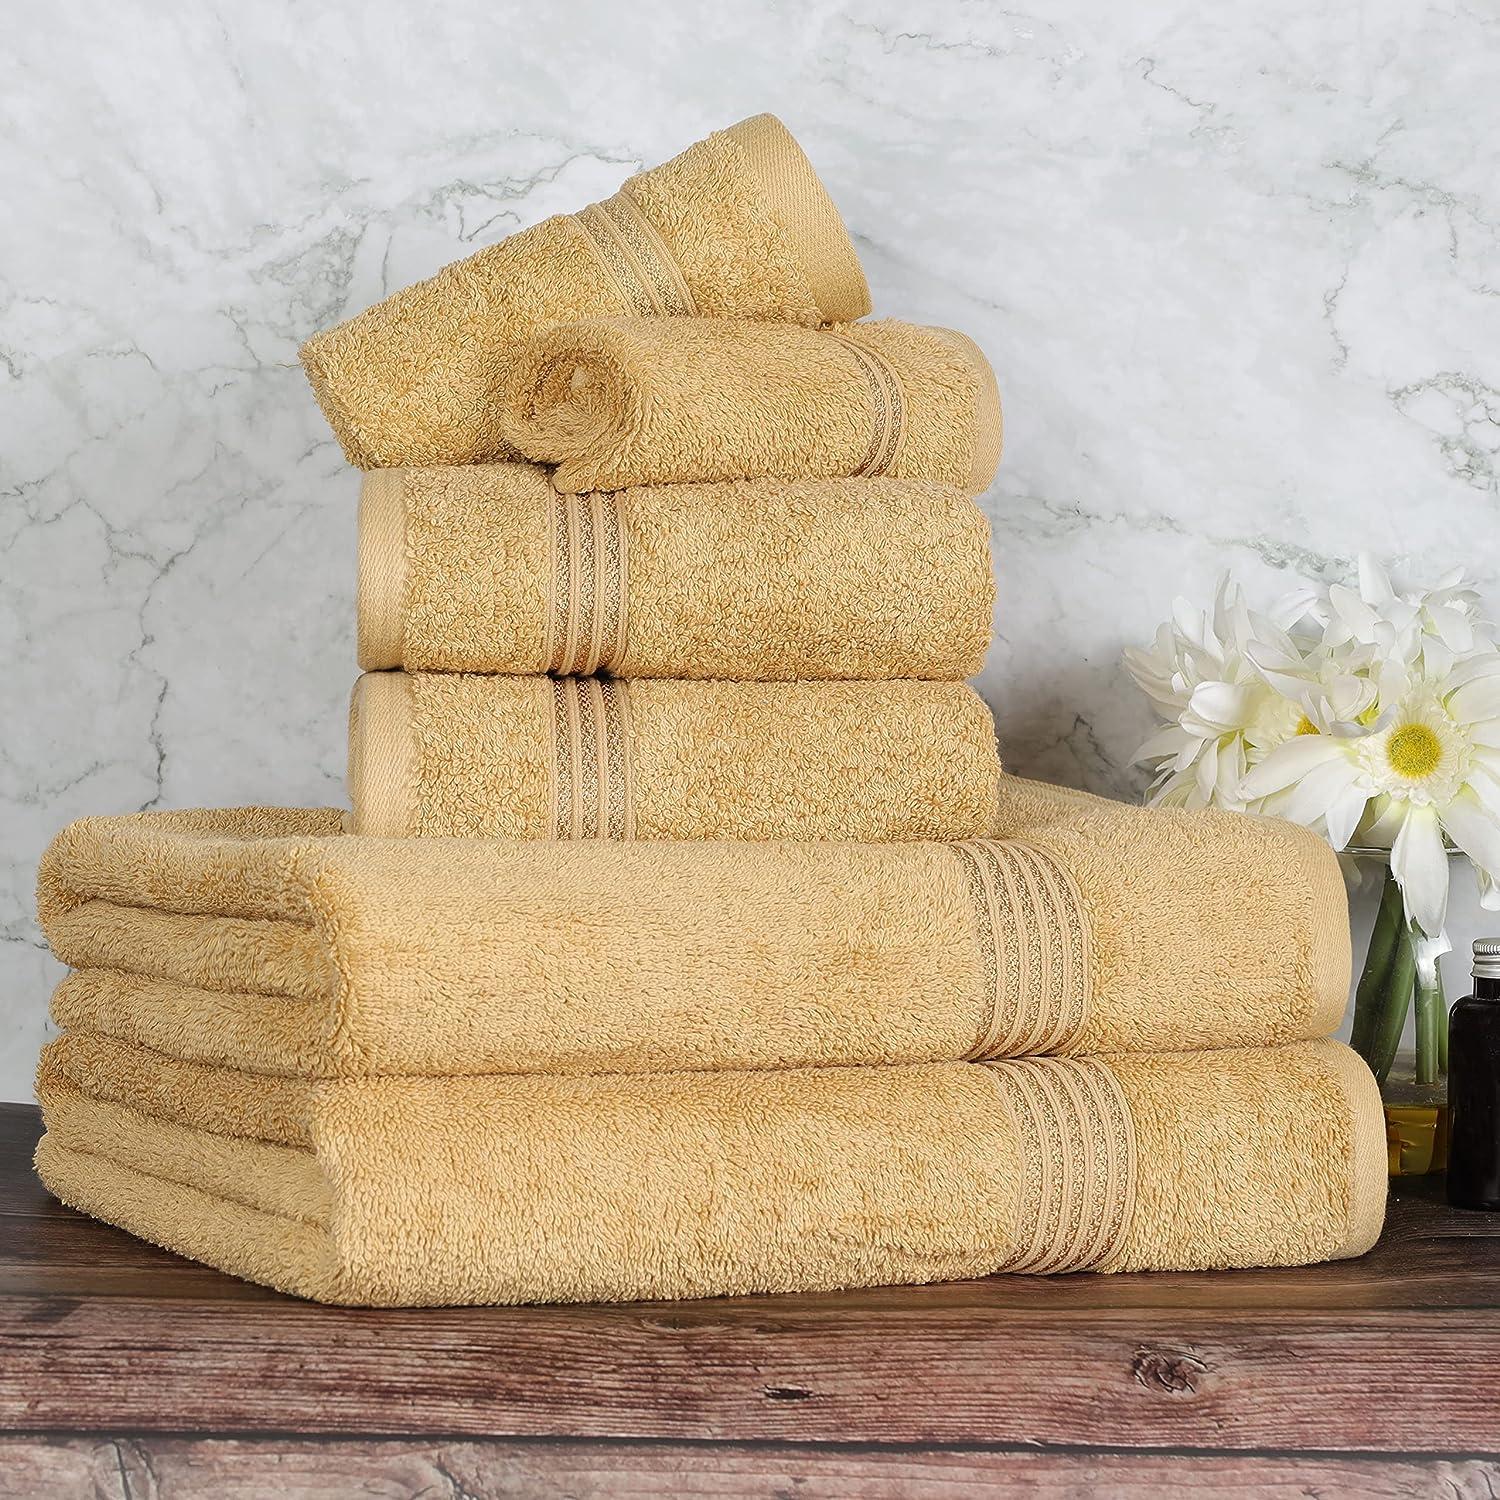 Superior 6-Piece Egyptian Cotton Bath Towel Set, 6 PC Set